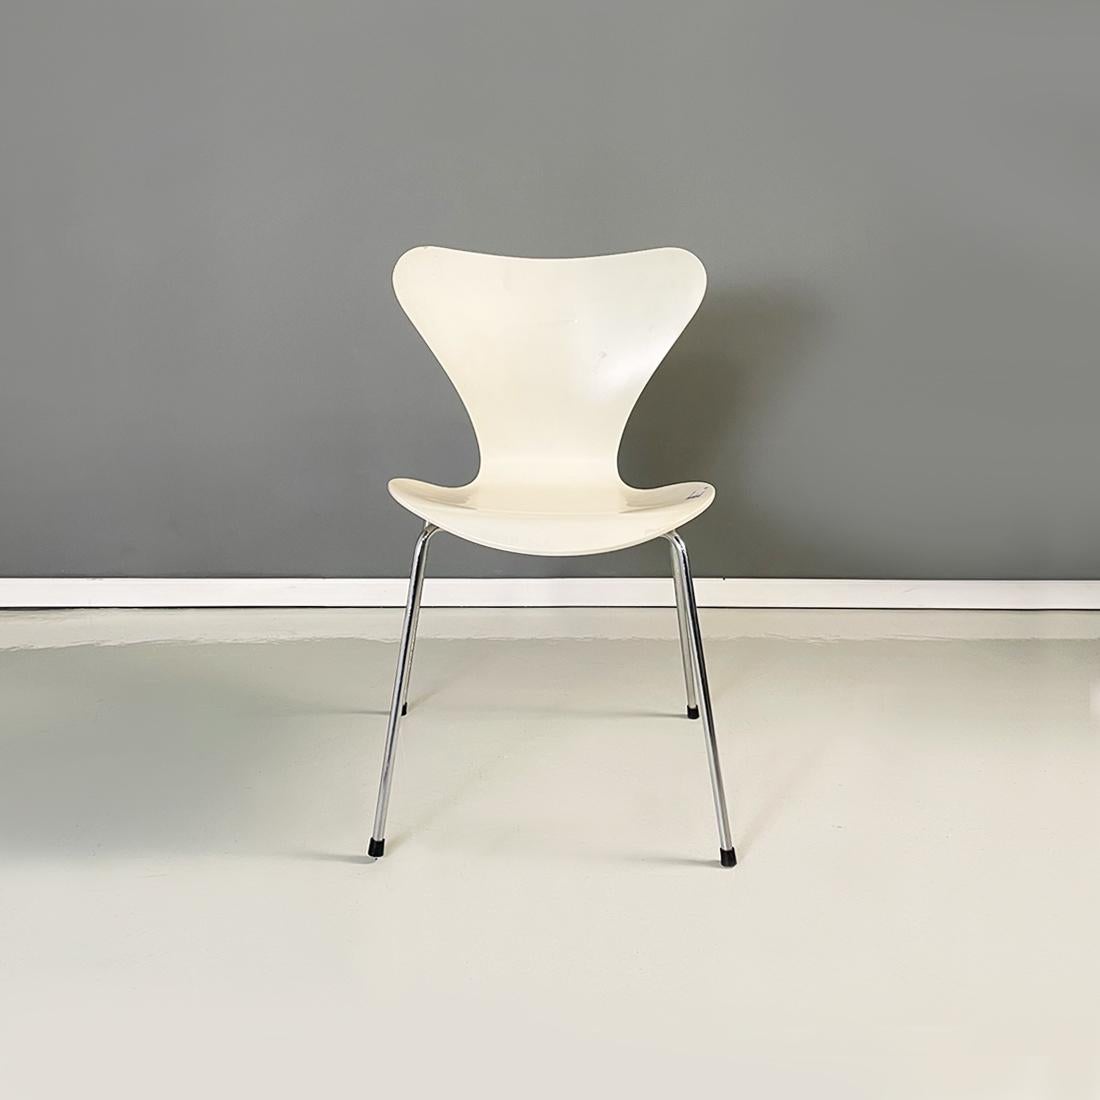 Danish Modern White Chairs of Series 7 by Arne Jacobsen for Fritz Hansen, 1970s For Sale 11